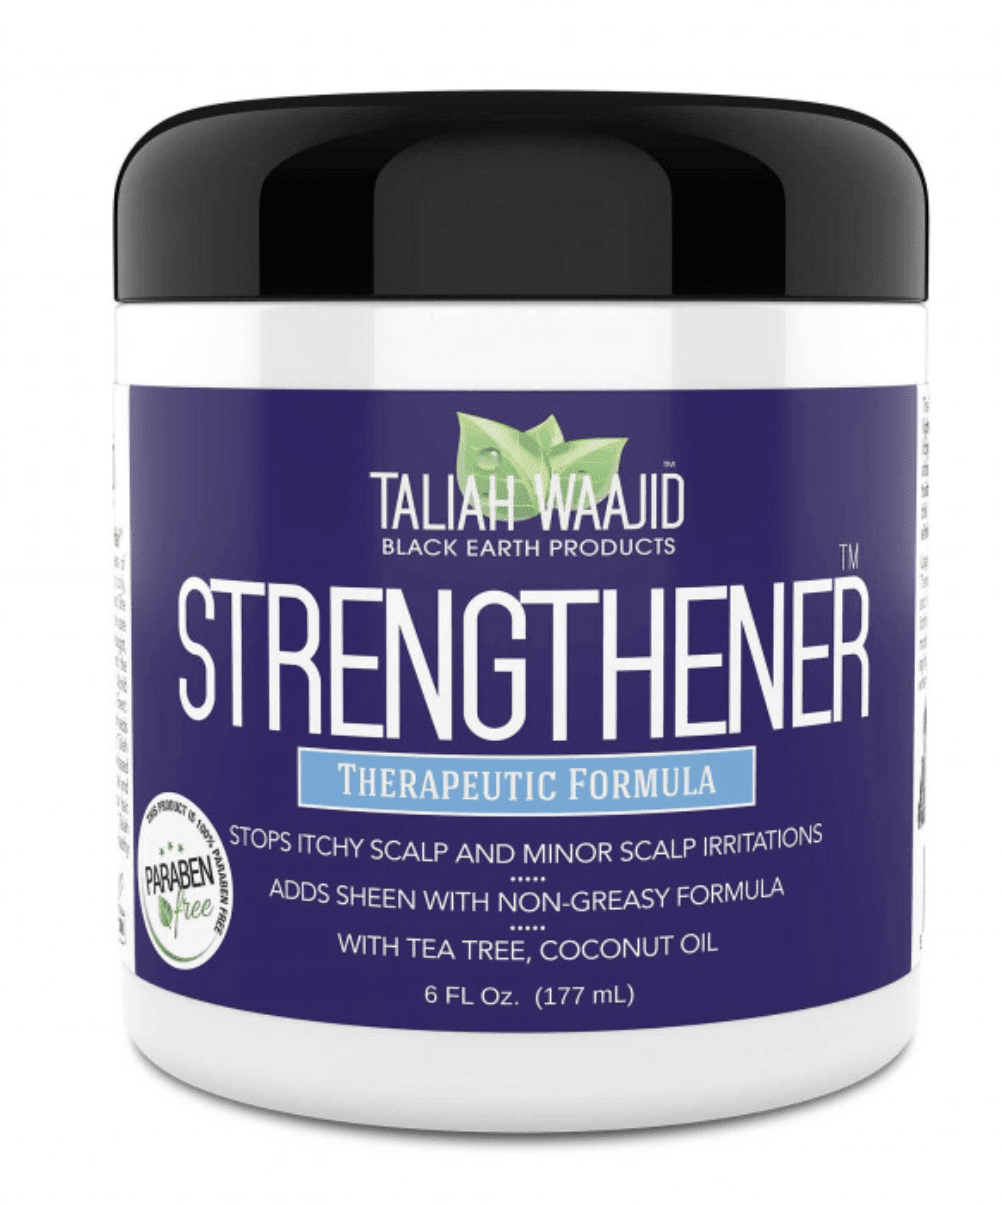 Taliah Waajid - Black Earth Products - Hair ointment "strengthener" - 177ml - Taliah Waajid - Ethni Beauty Market